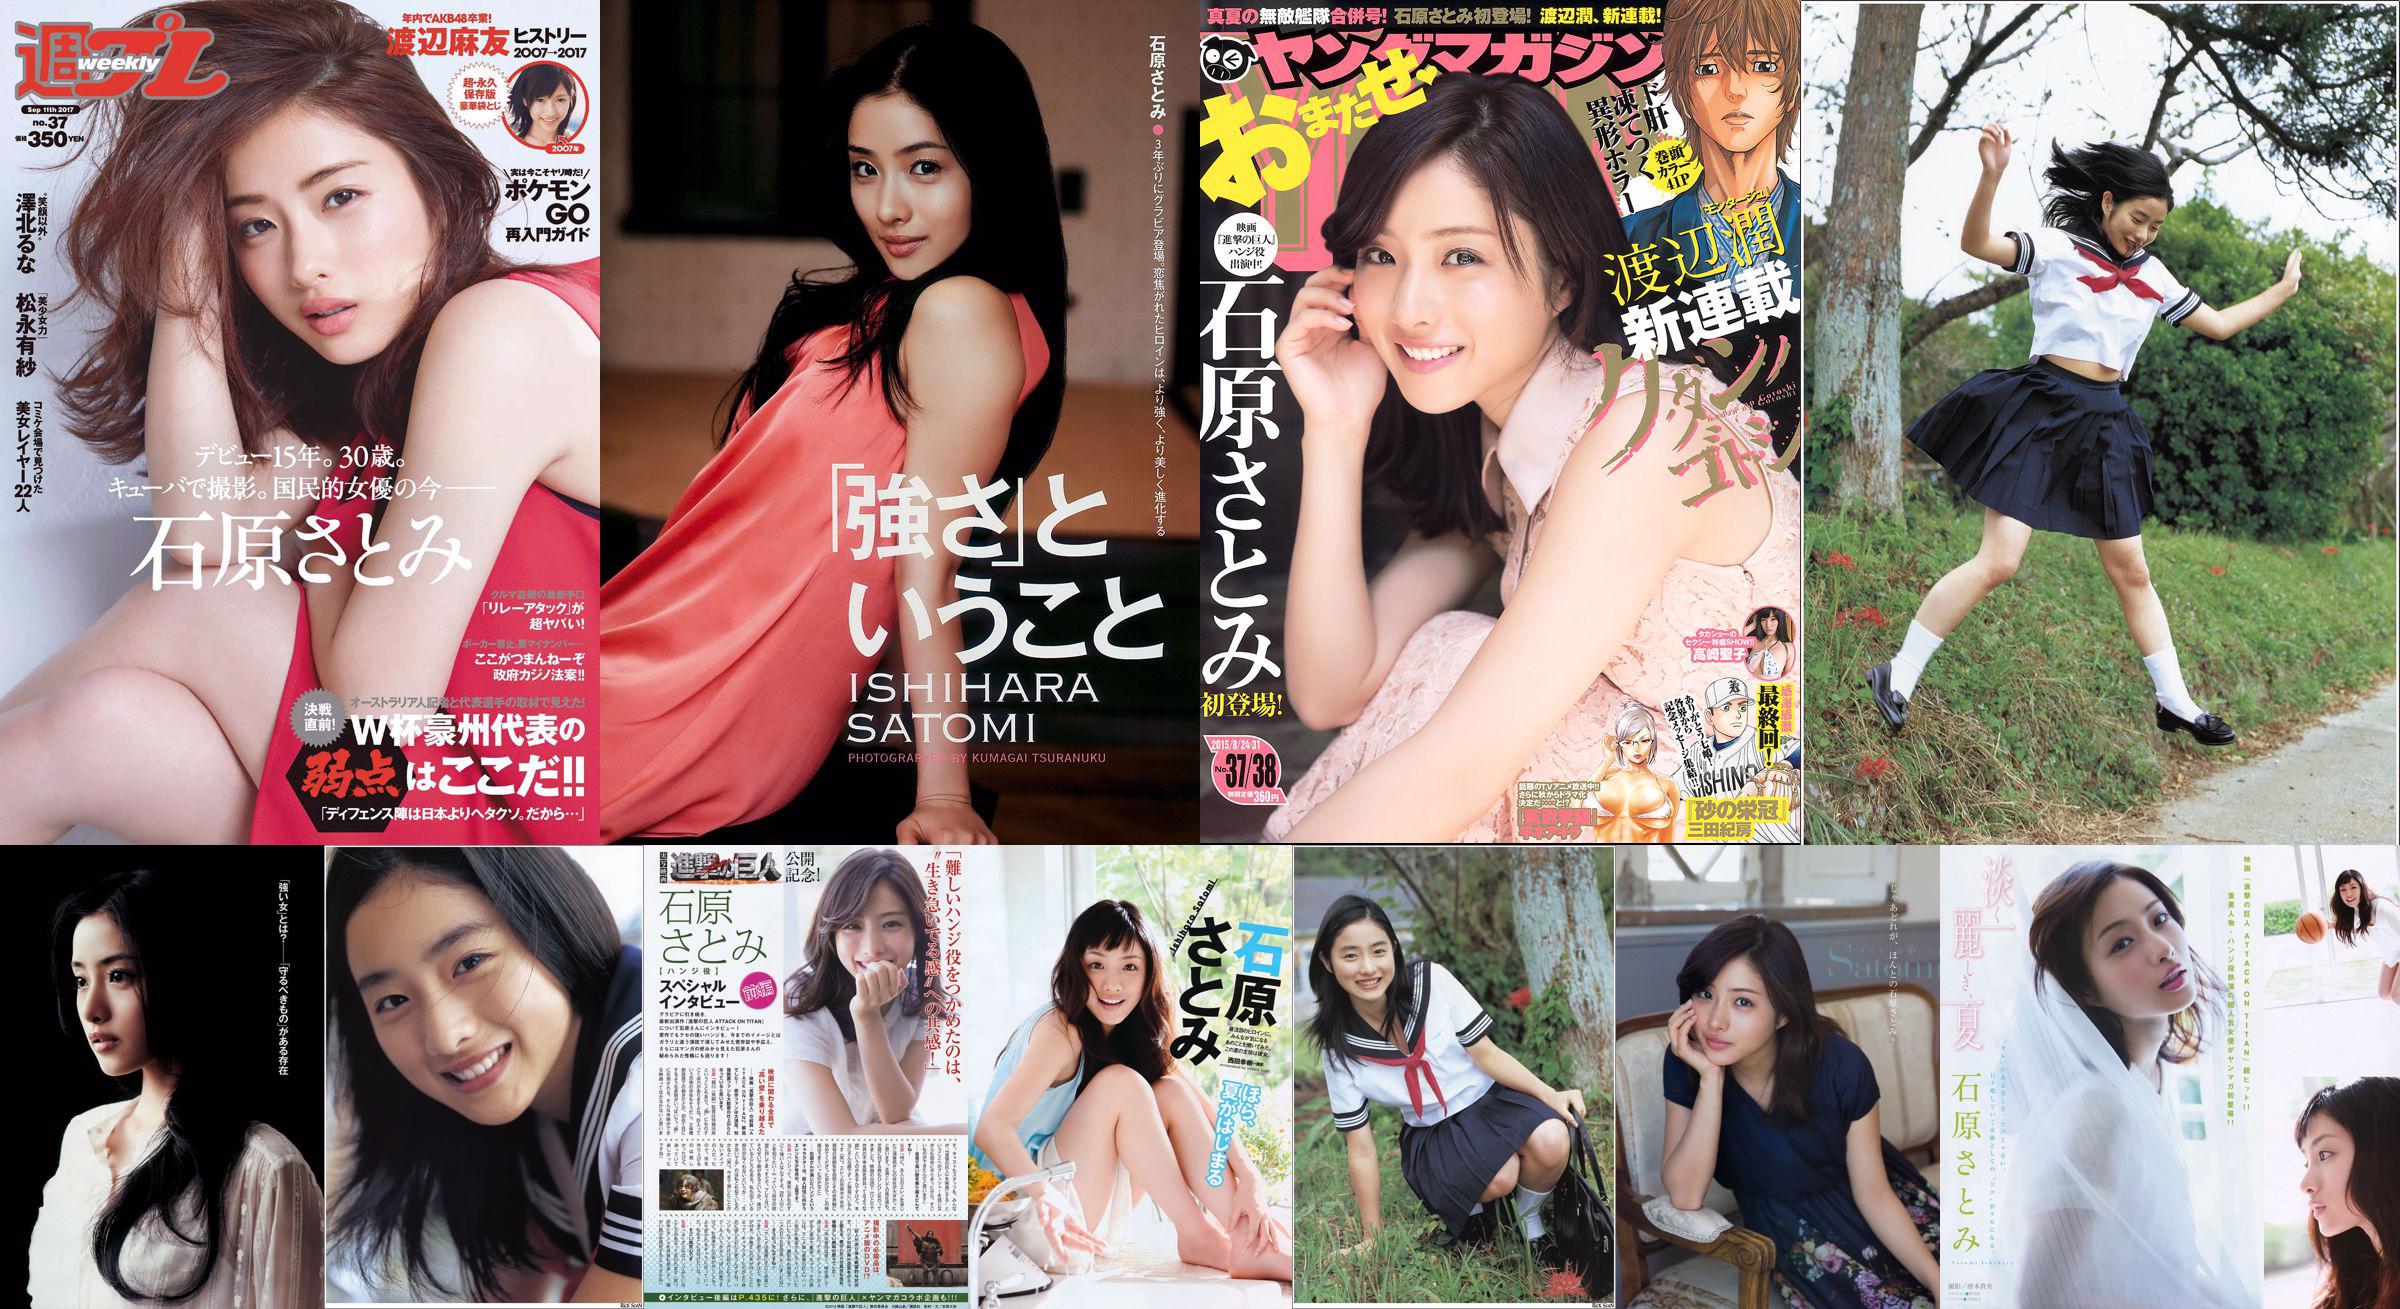 [Majalah Muda] Ishihara Majalah Foto Takasaki Seiko 2015 No.37-38 No.cd53b4 Halaman 1